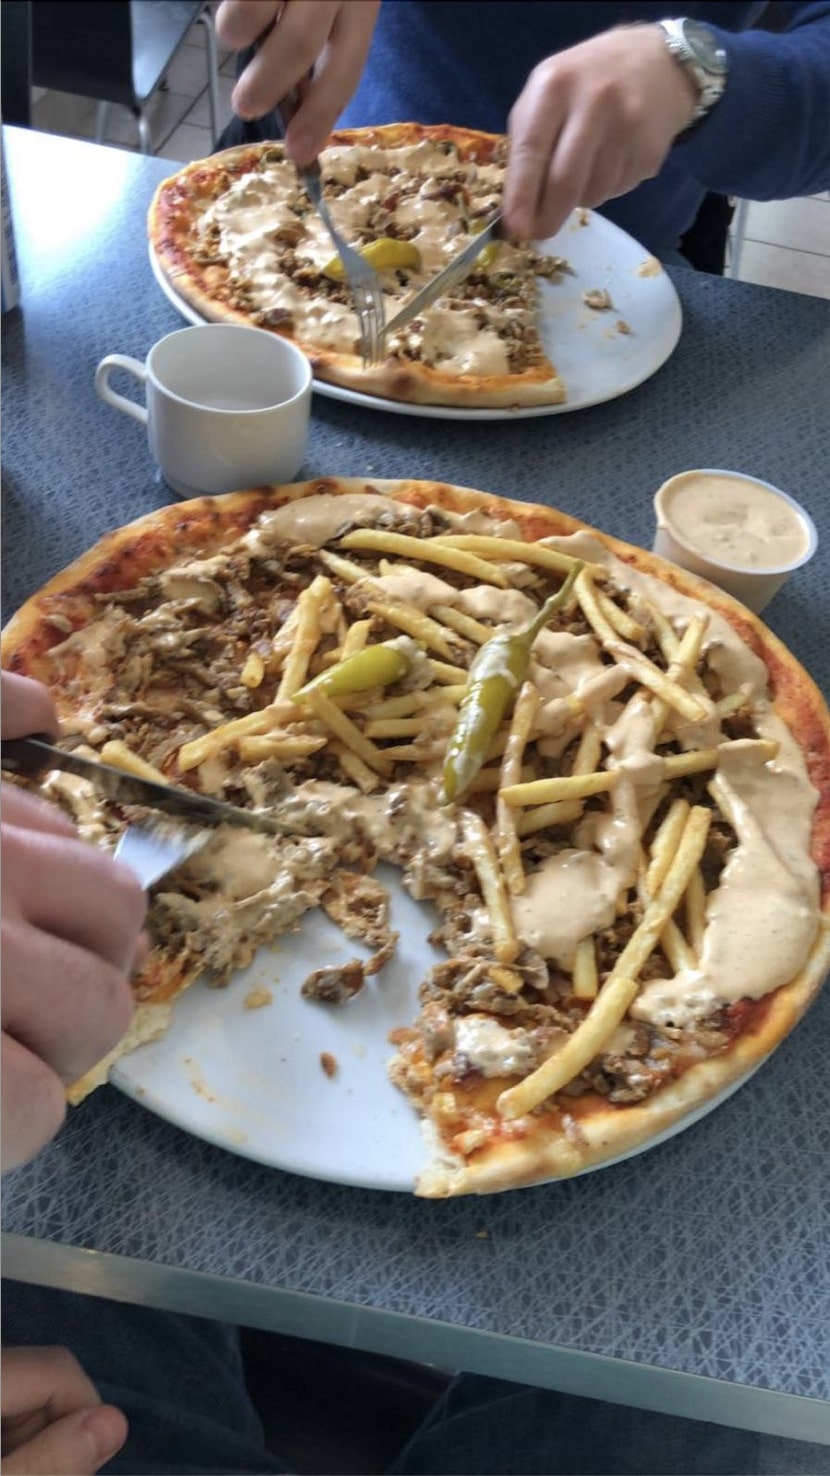 Stockholm pizza